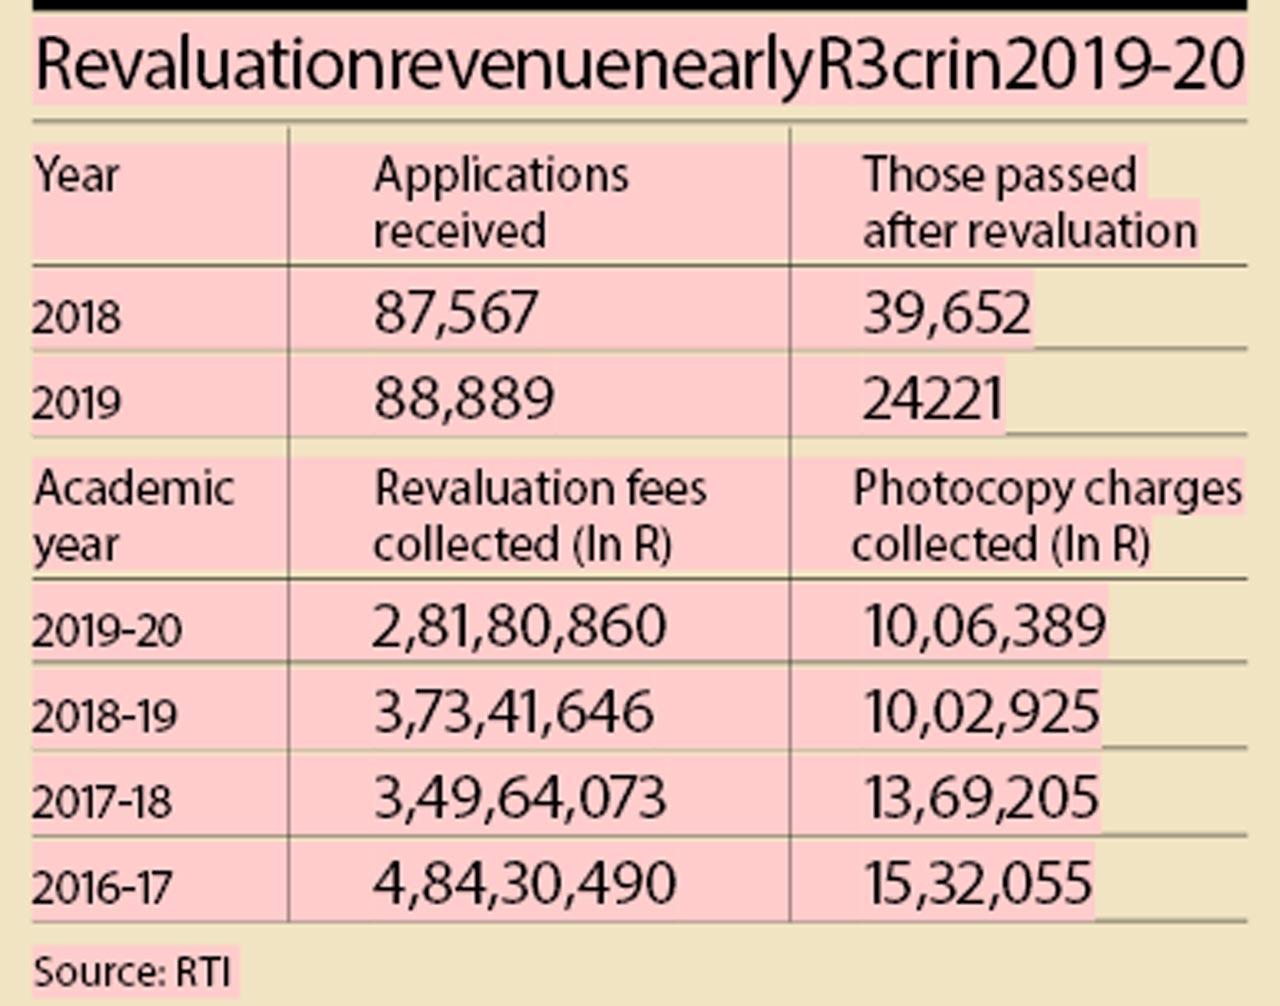 Revaluation revenue nearly R3 cr in 2019-20